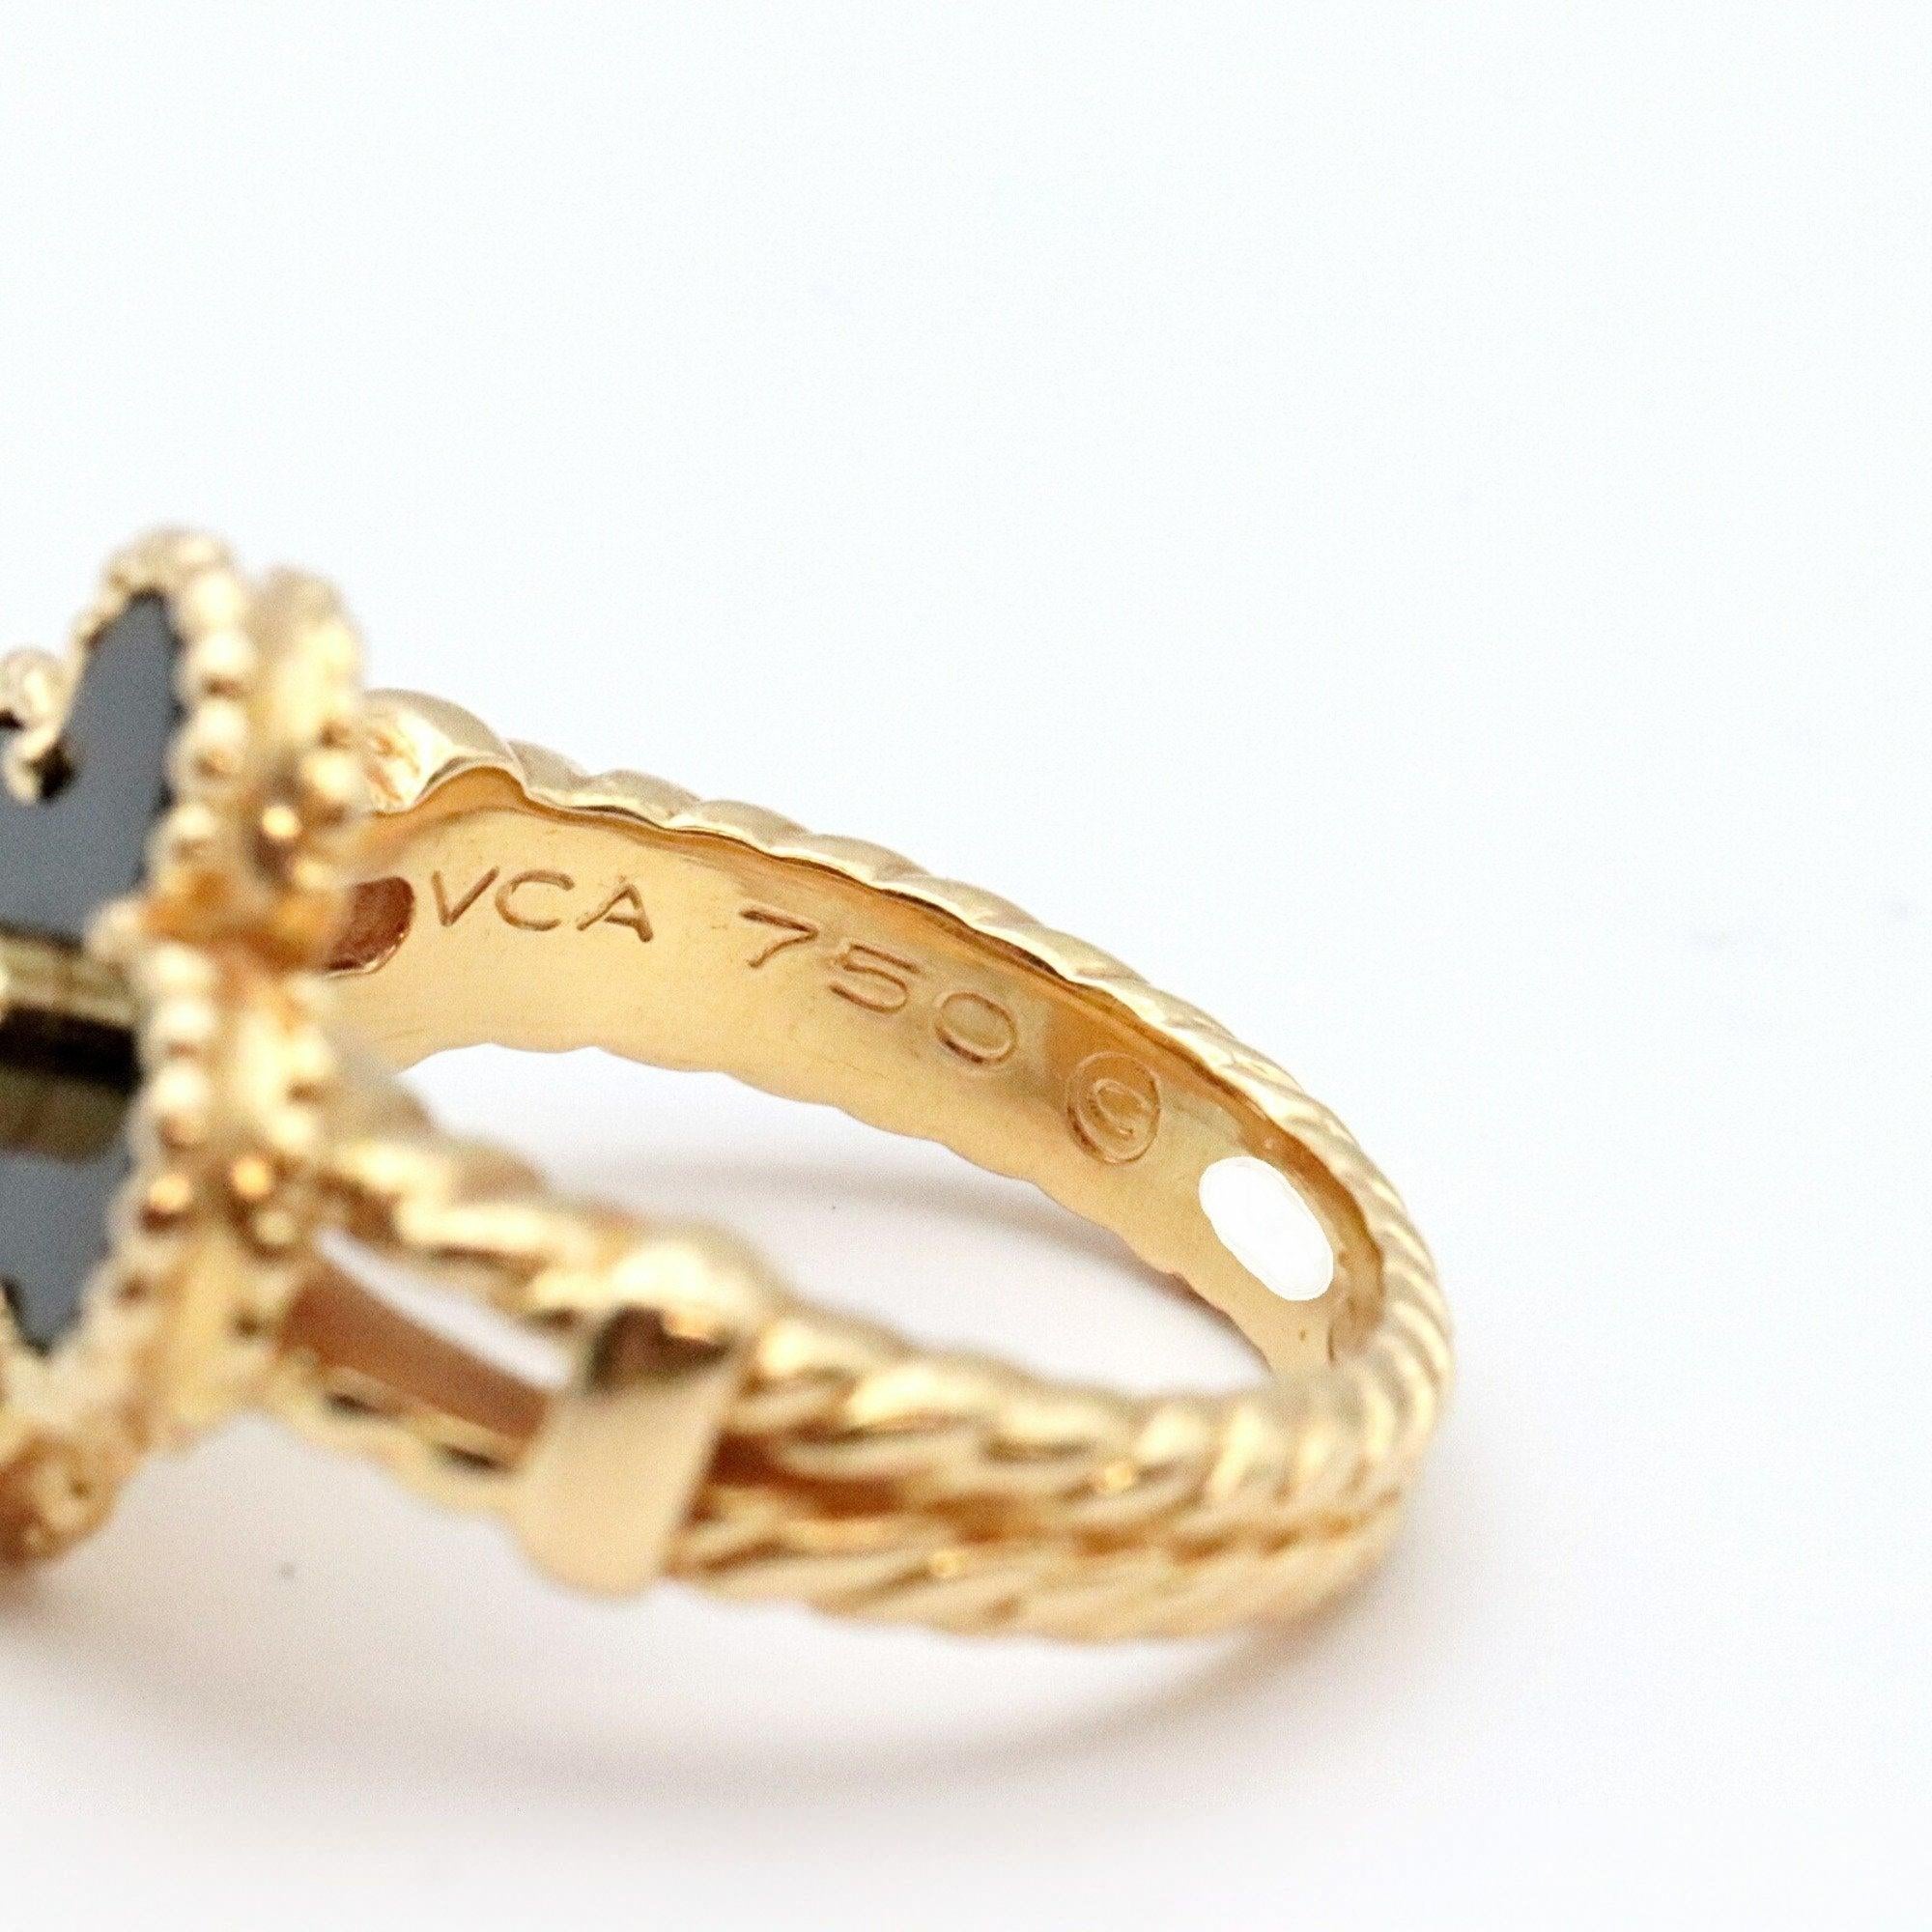 Women's Van Cleef & Arpels Vintage Alhambra Diamond Ring in 18K Yellow Gold For Sale